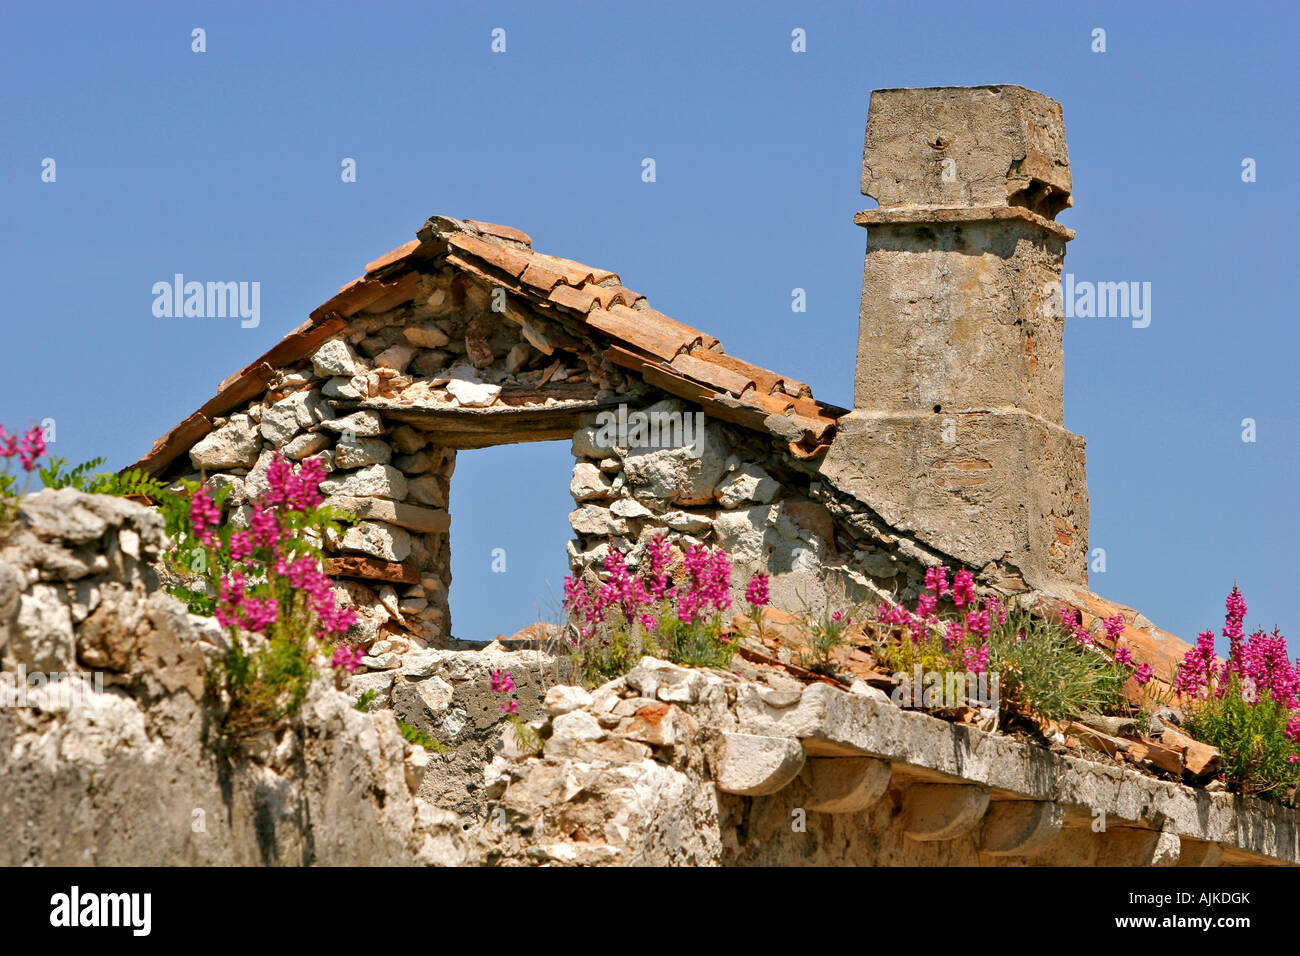 Wildblumen auf einer Ruine auf der Insel Premuda | Fiori Selvatici su una rovina sulla Isola Premuda Foto Stock